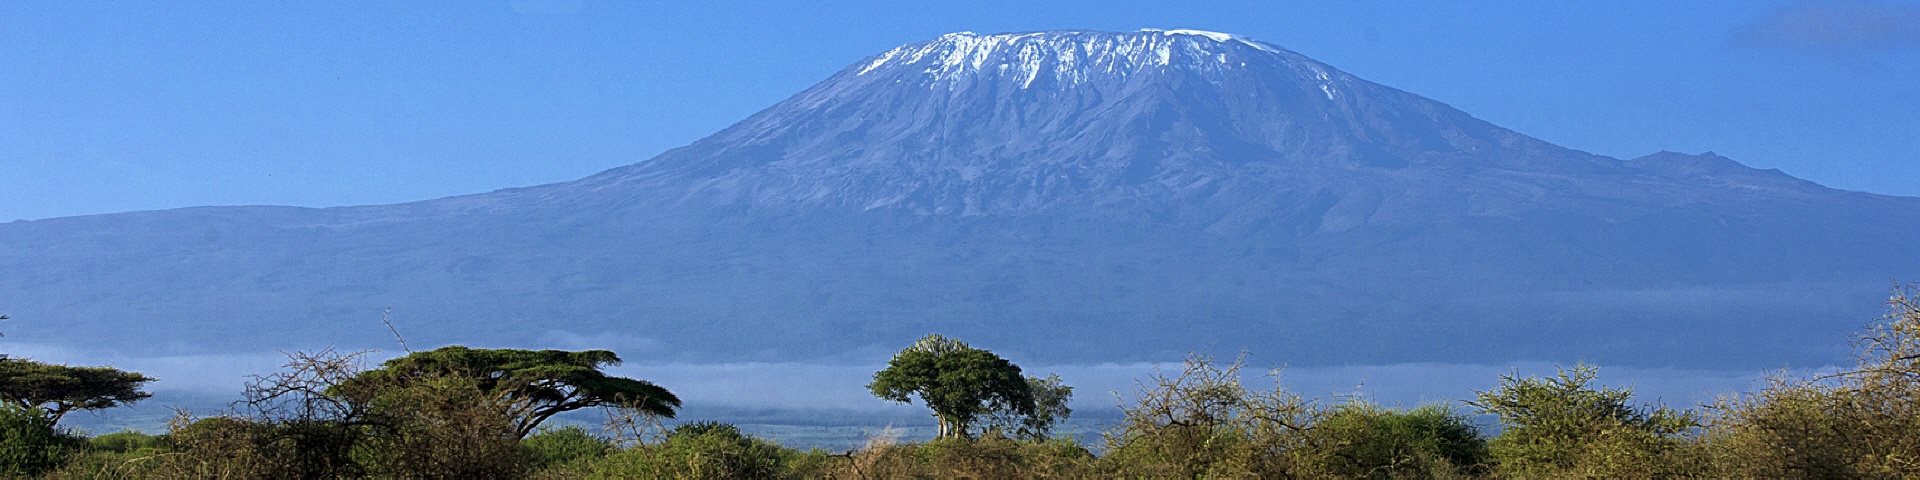 Der Kilimanjaro